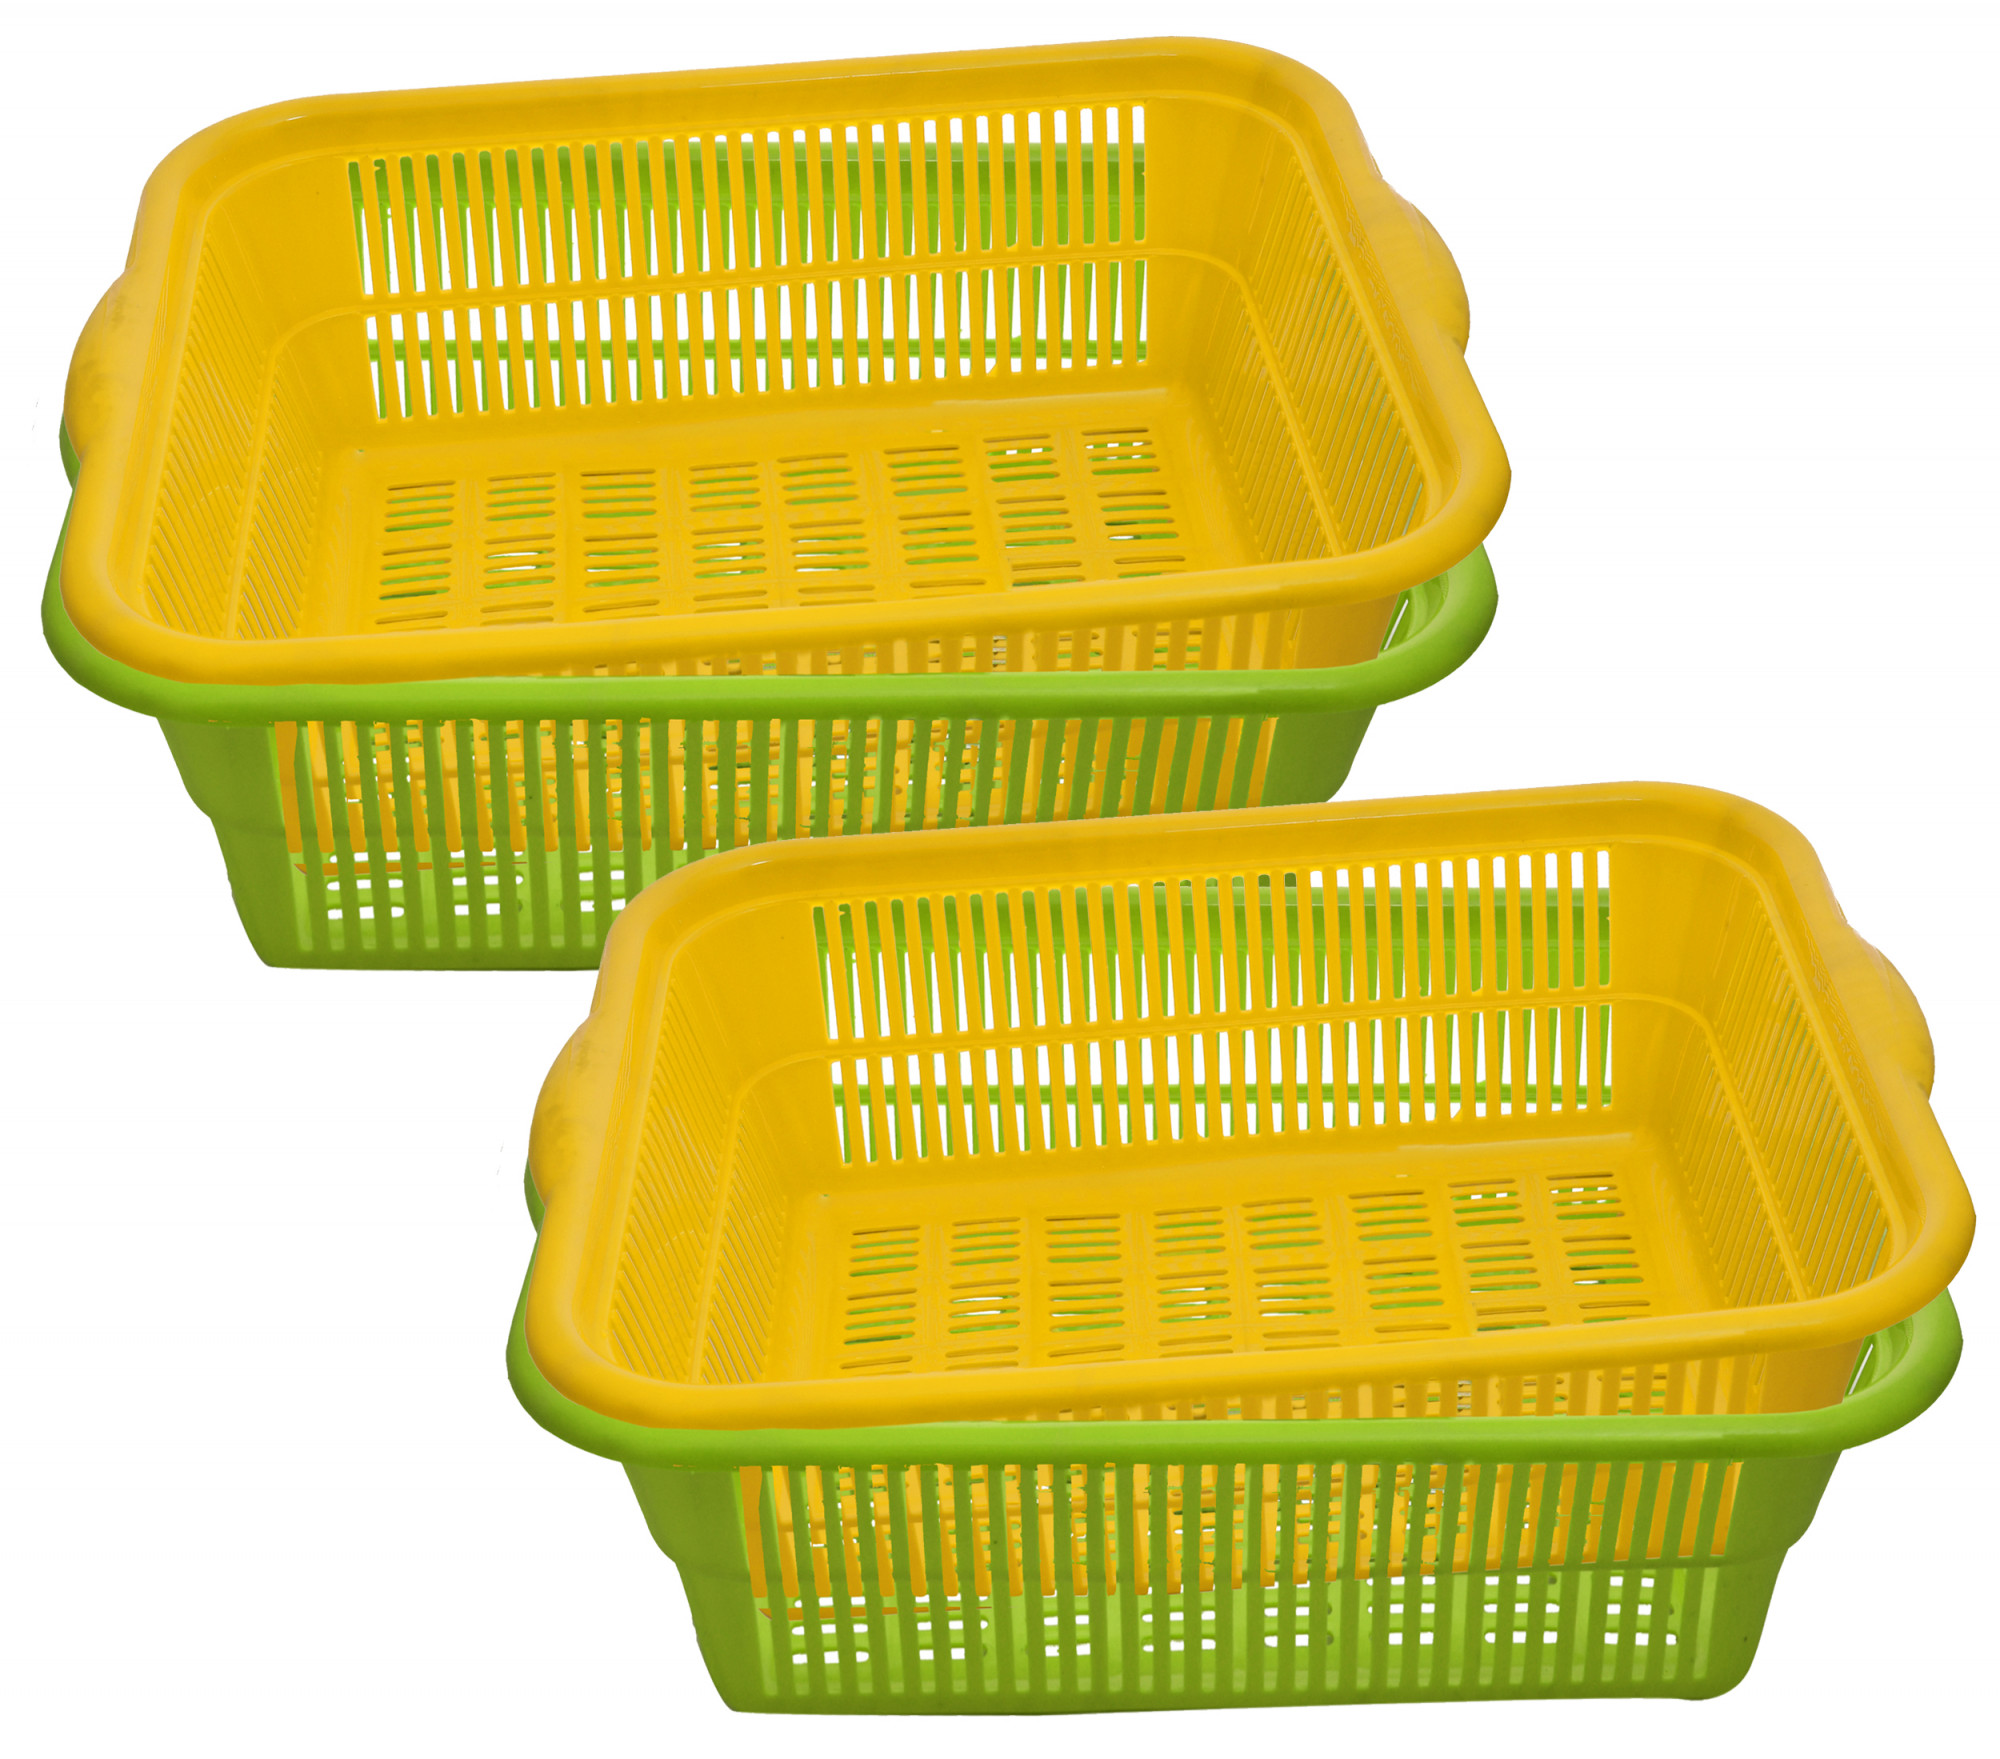 Kuber Industries Plastic Kitchen Dish Rack Drainer Vegetables And Fruits Basket Dish Rack Multipurpose Organizers ,Medium Size,Green & Yellow